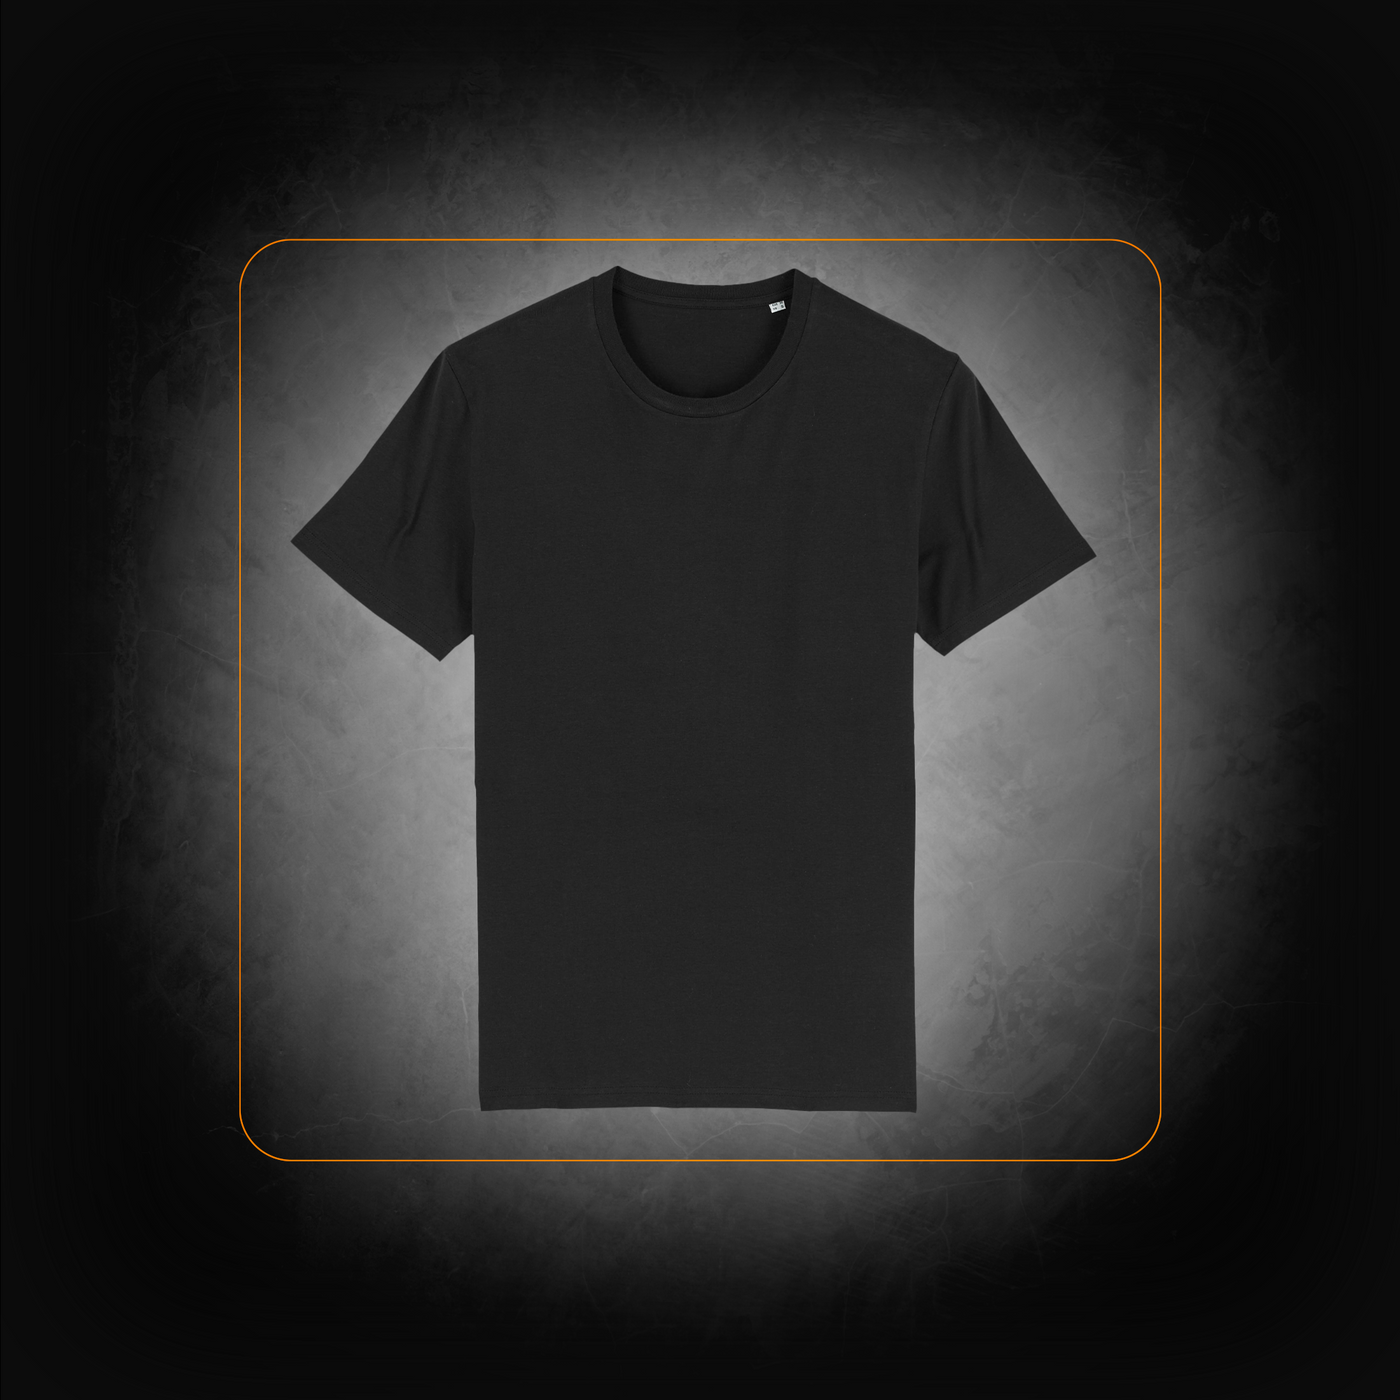 Black t-shirt Logo on the back - Jamel Comedy Club